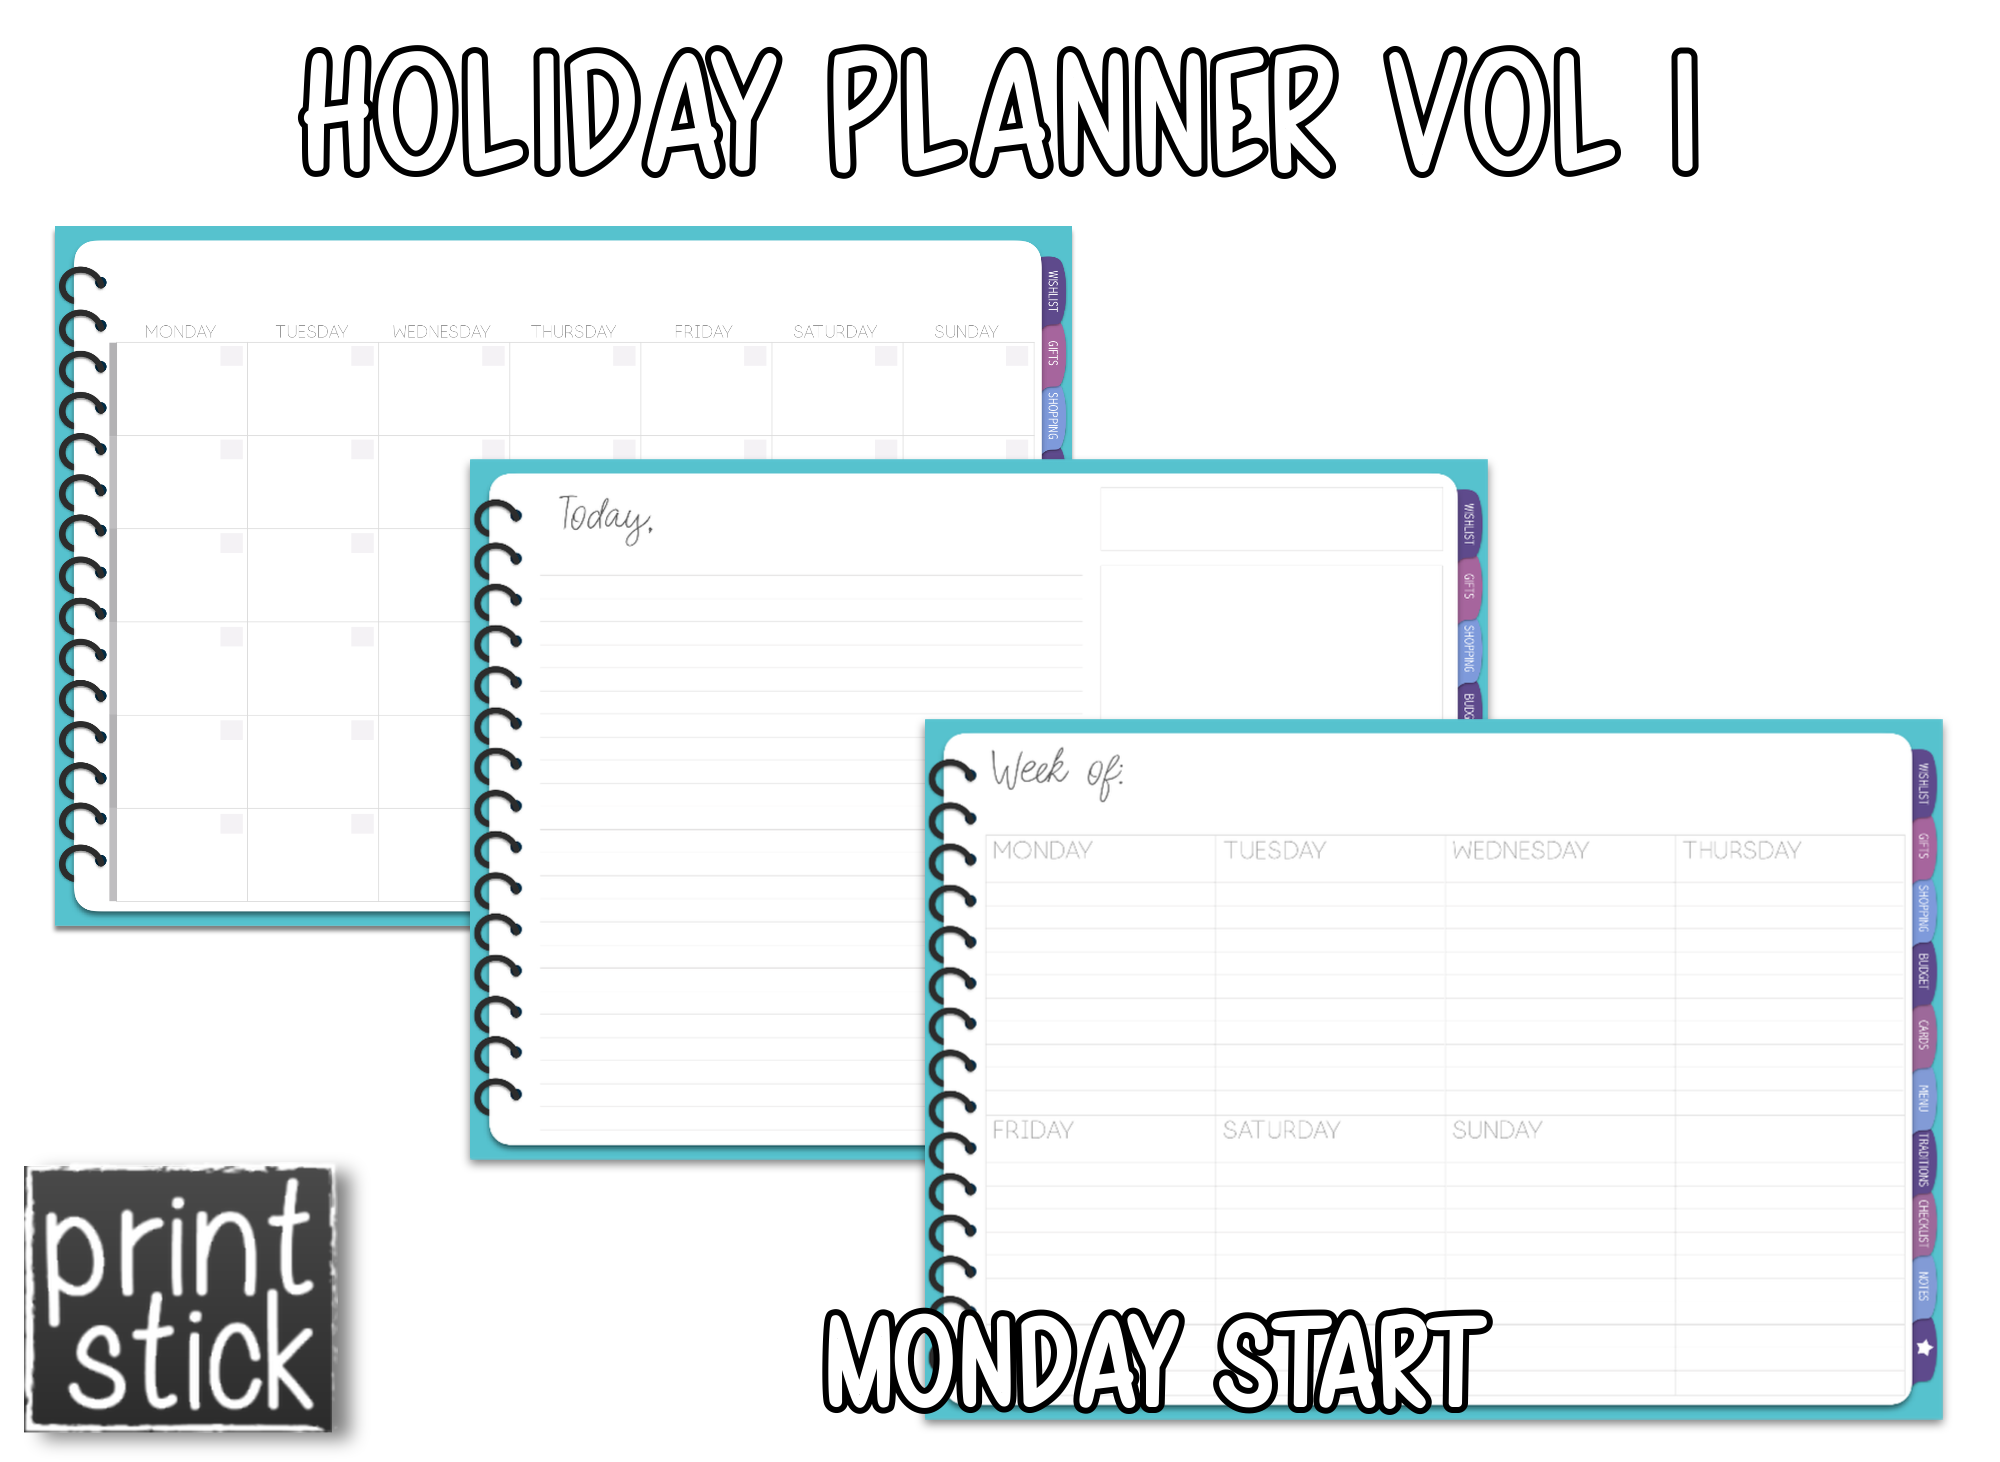 Holiday Planner Vol I - Print Stick